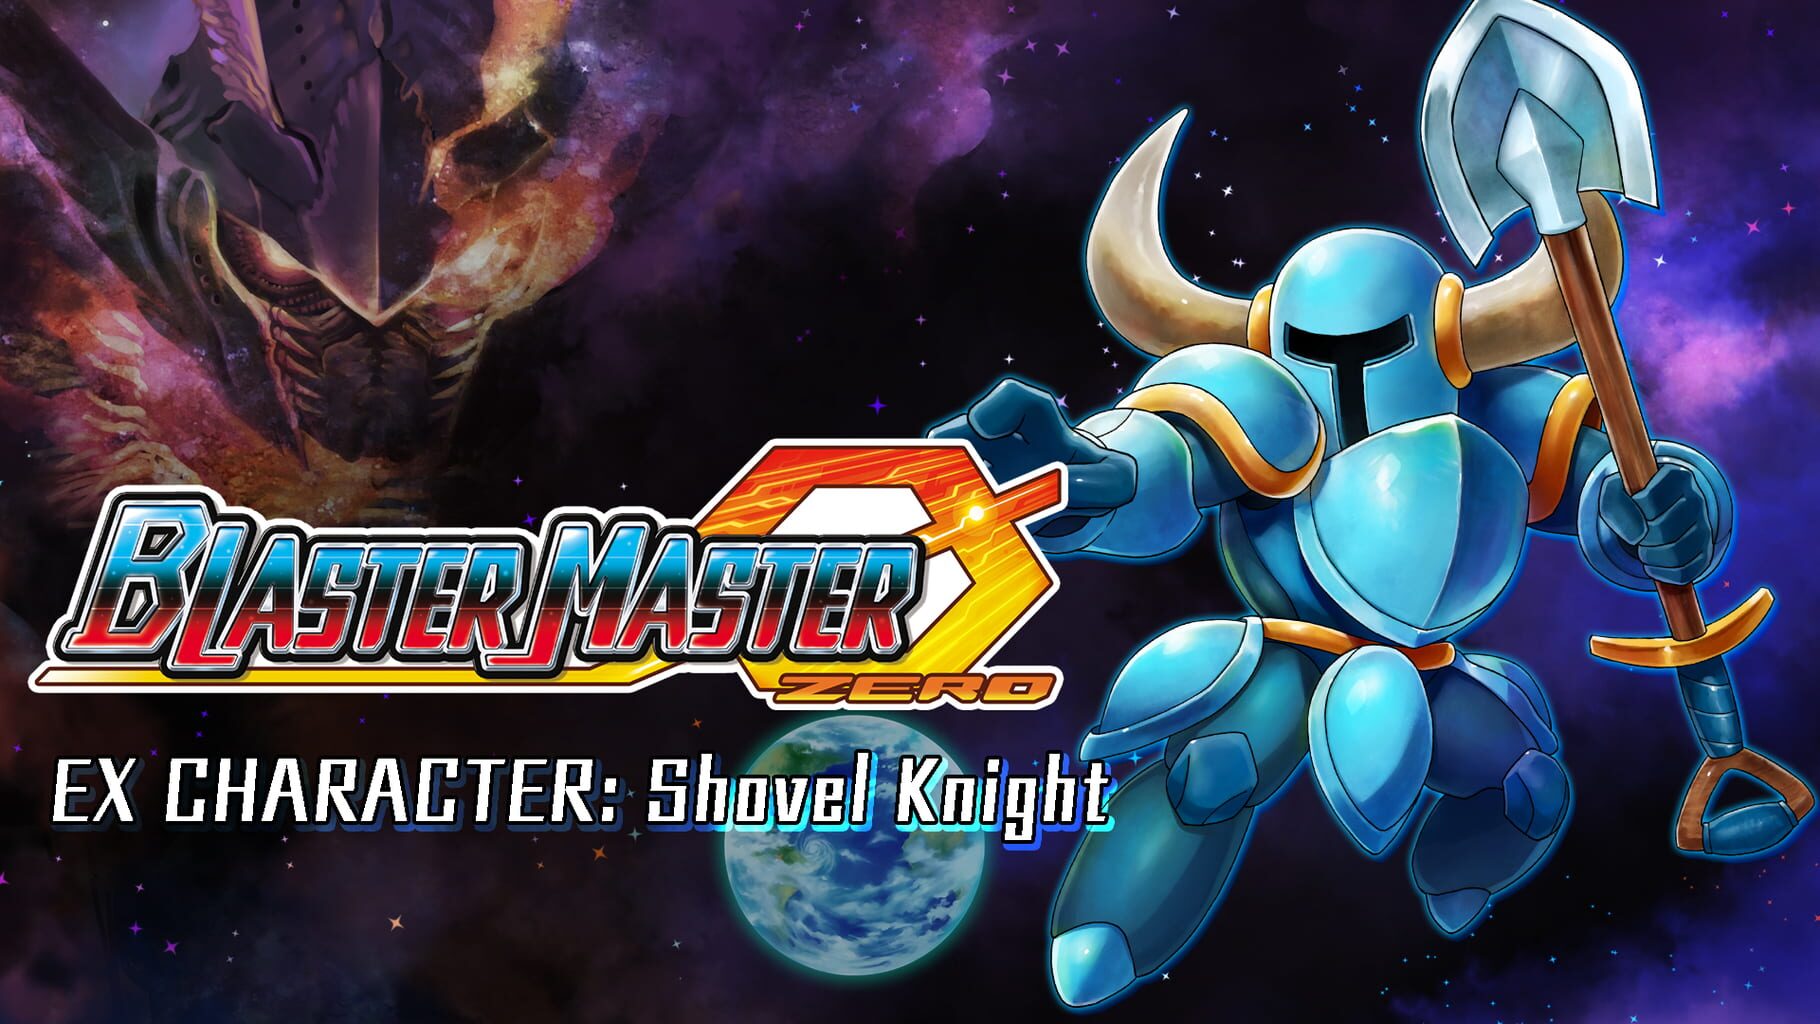 Blaster Master Zero: EX Character - Shovel Knight artwork